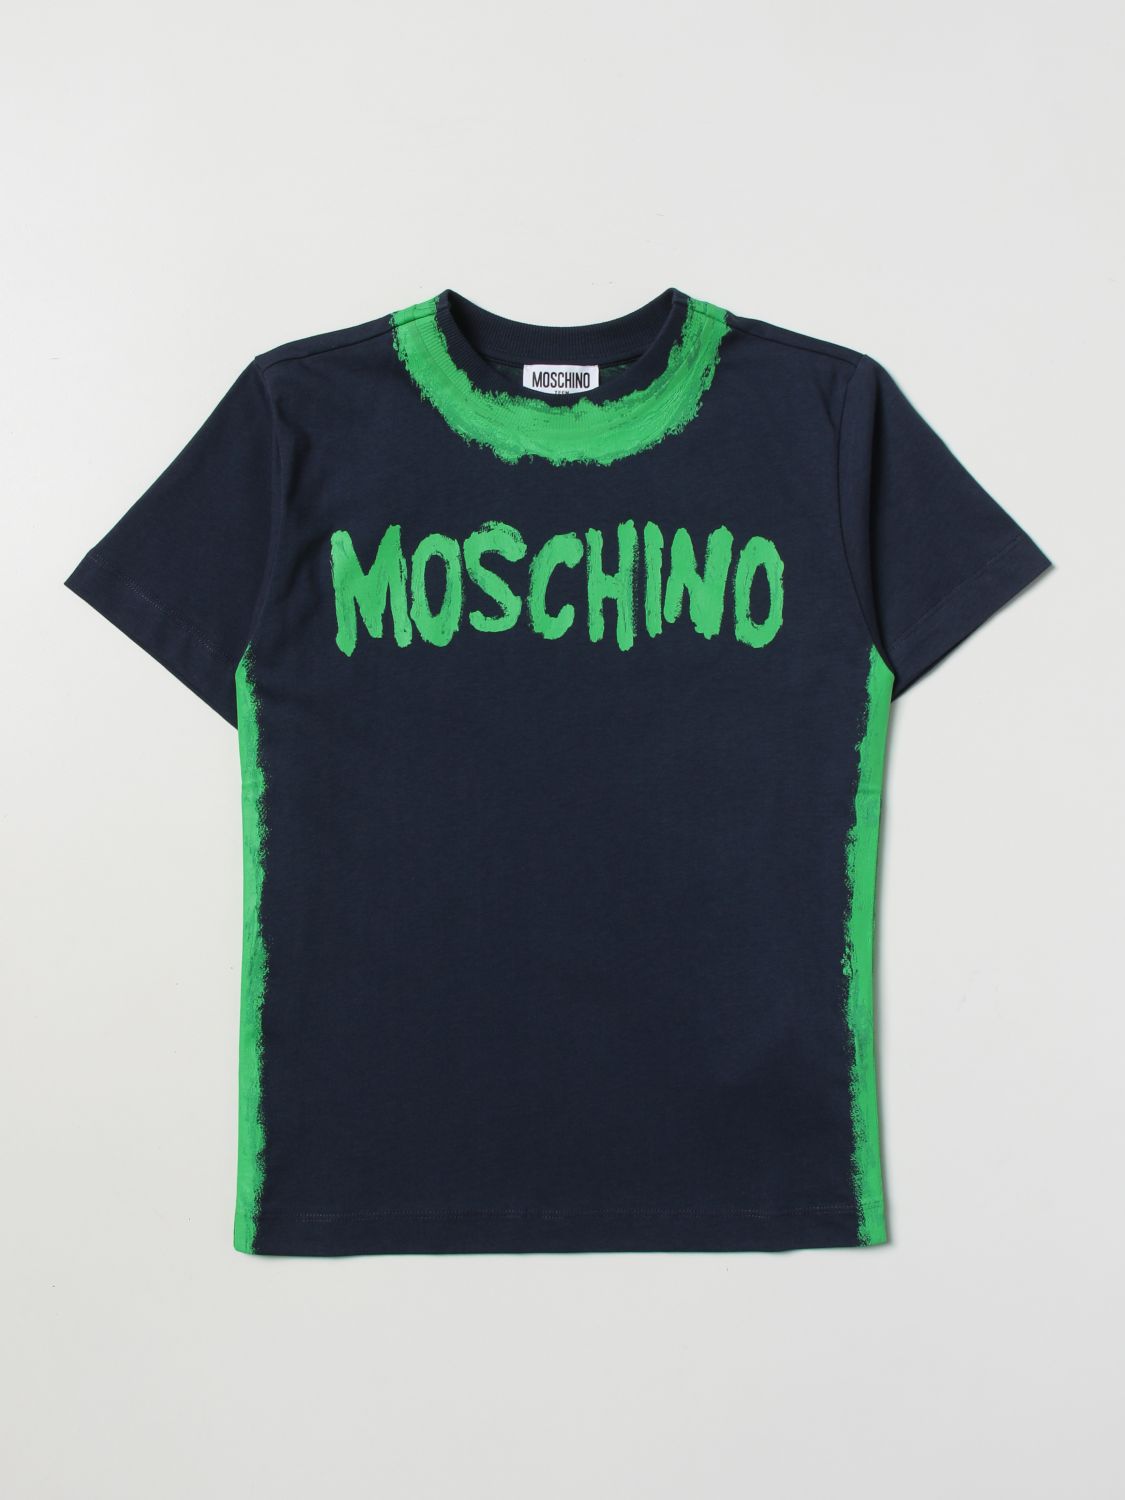 Moschino Kid T-shirt  Kids Color Blue